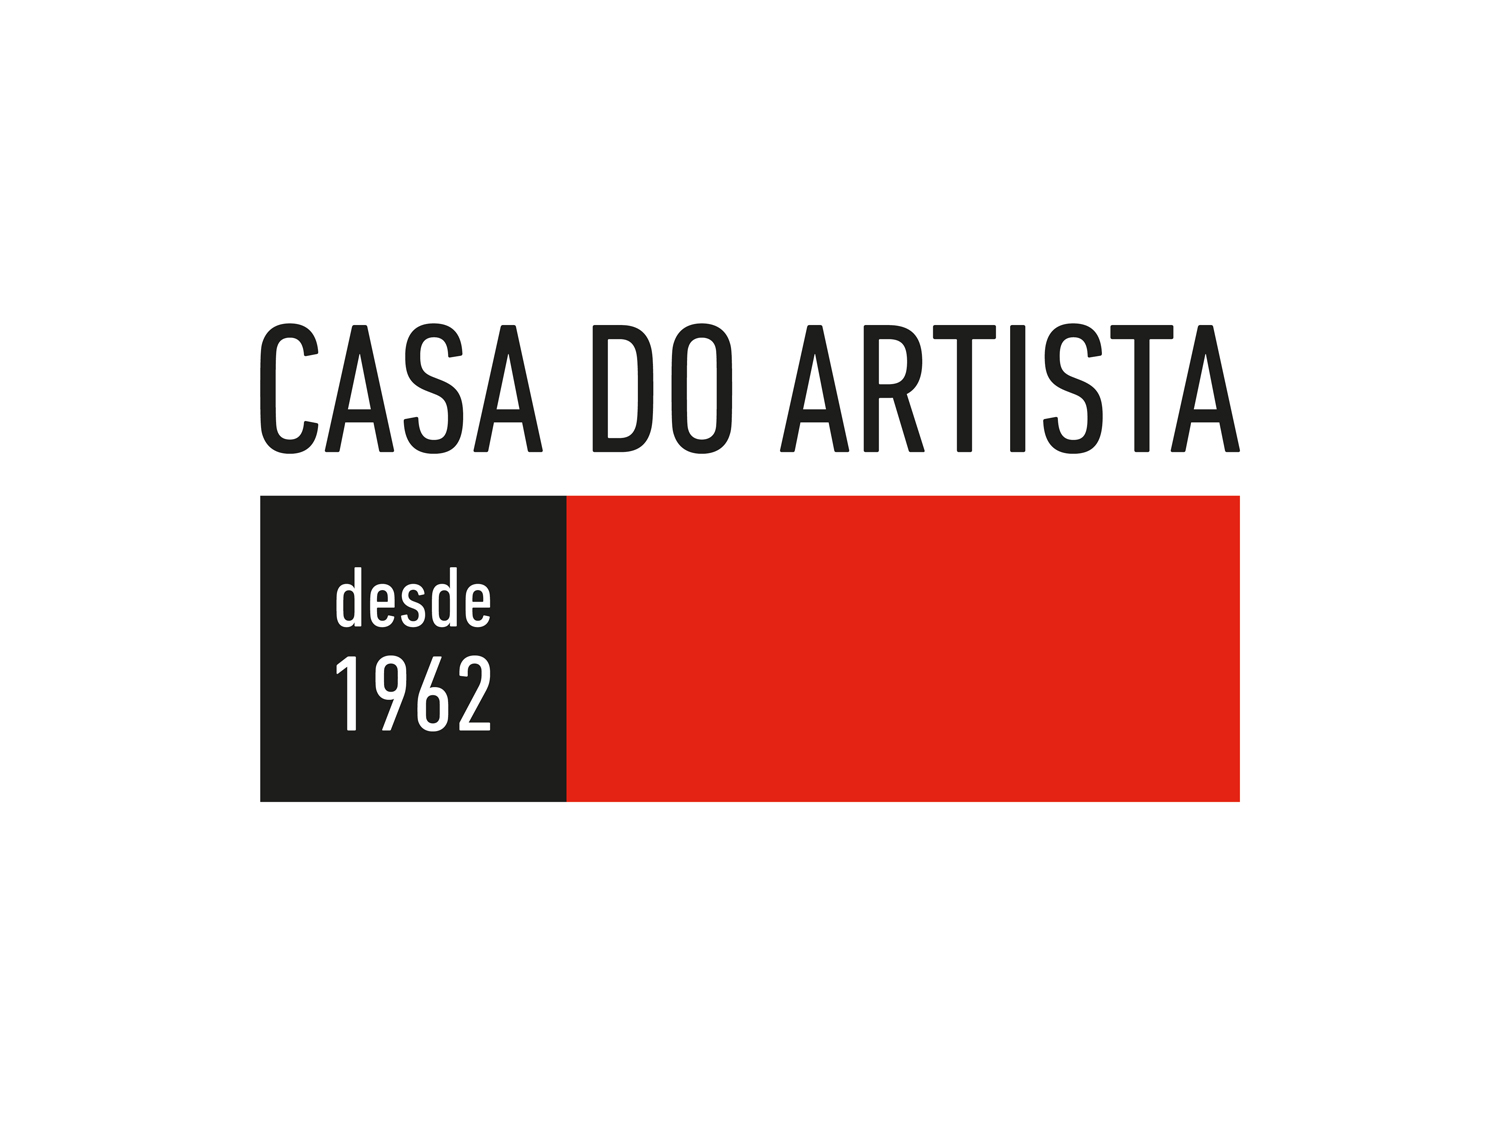 CASA DO ARTISTA | LOGO HORIZONTAL